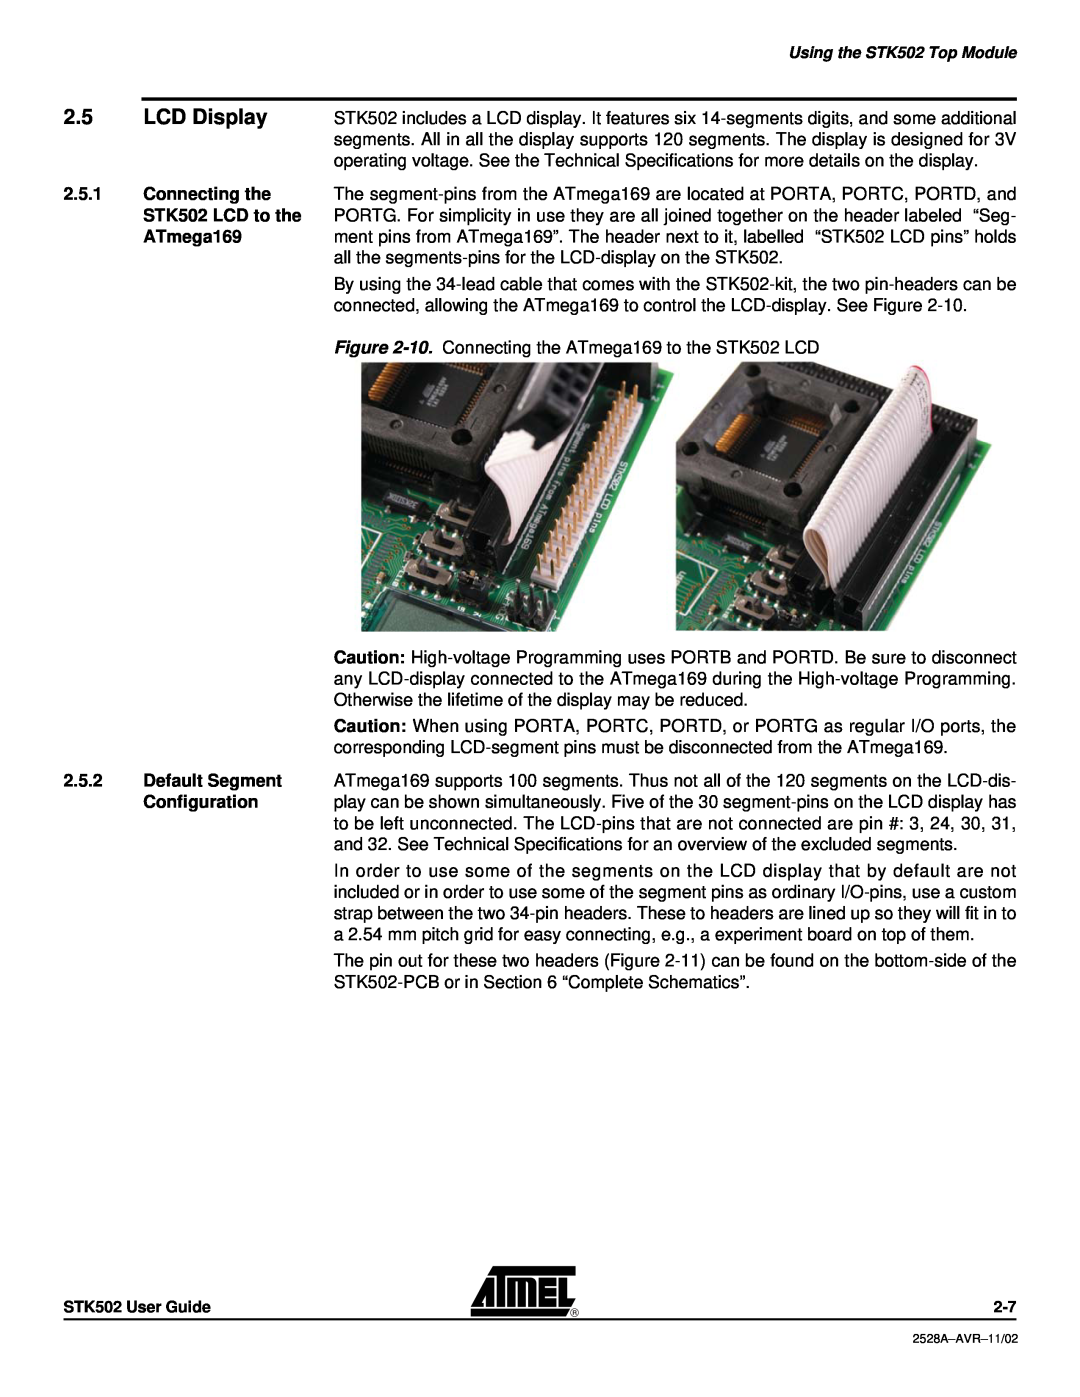 Atmel STK502 manual LCD Display, Configuration 